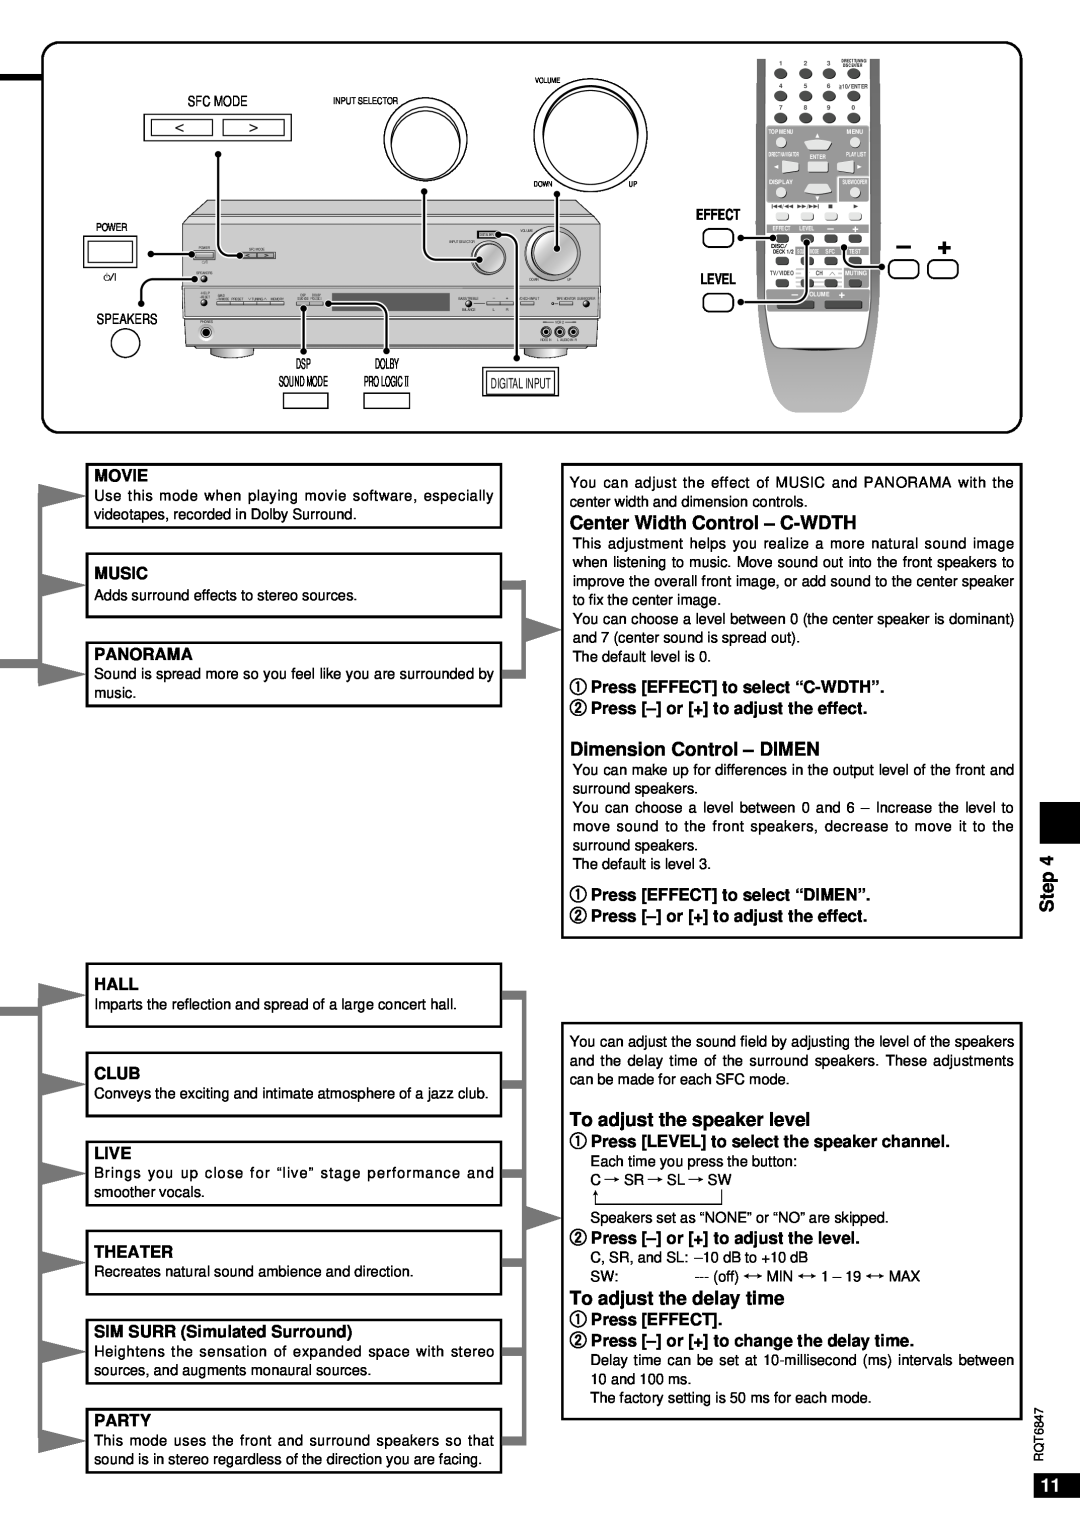 Panasonic SA-HE75 Center Width Control - C-WDTH, Dimension Control - DIMEN, To adjust the speaker level, Step 